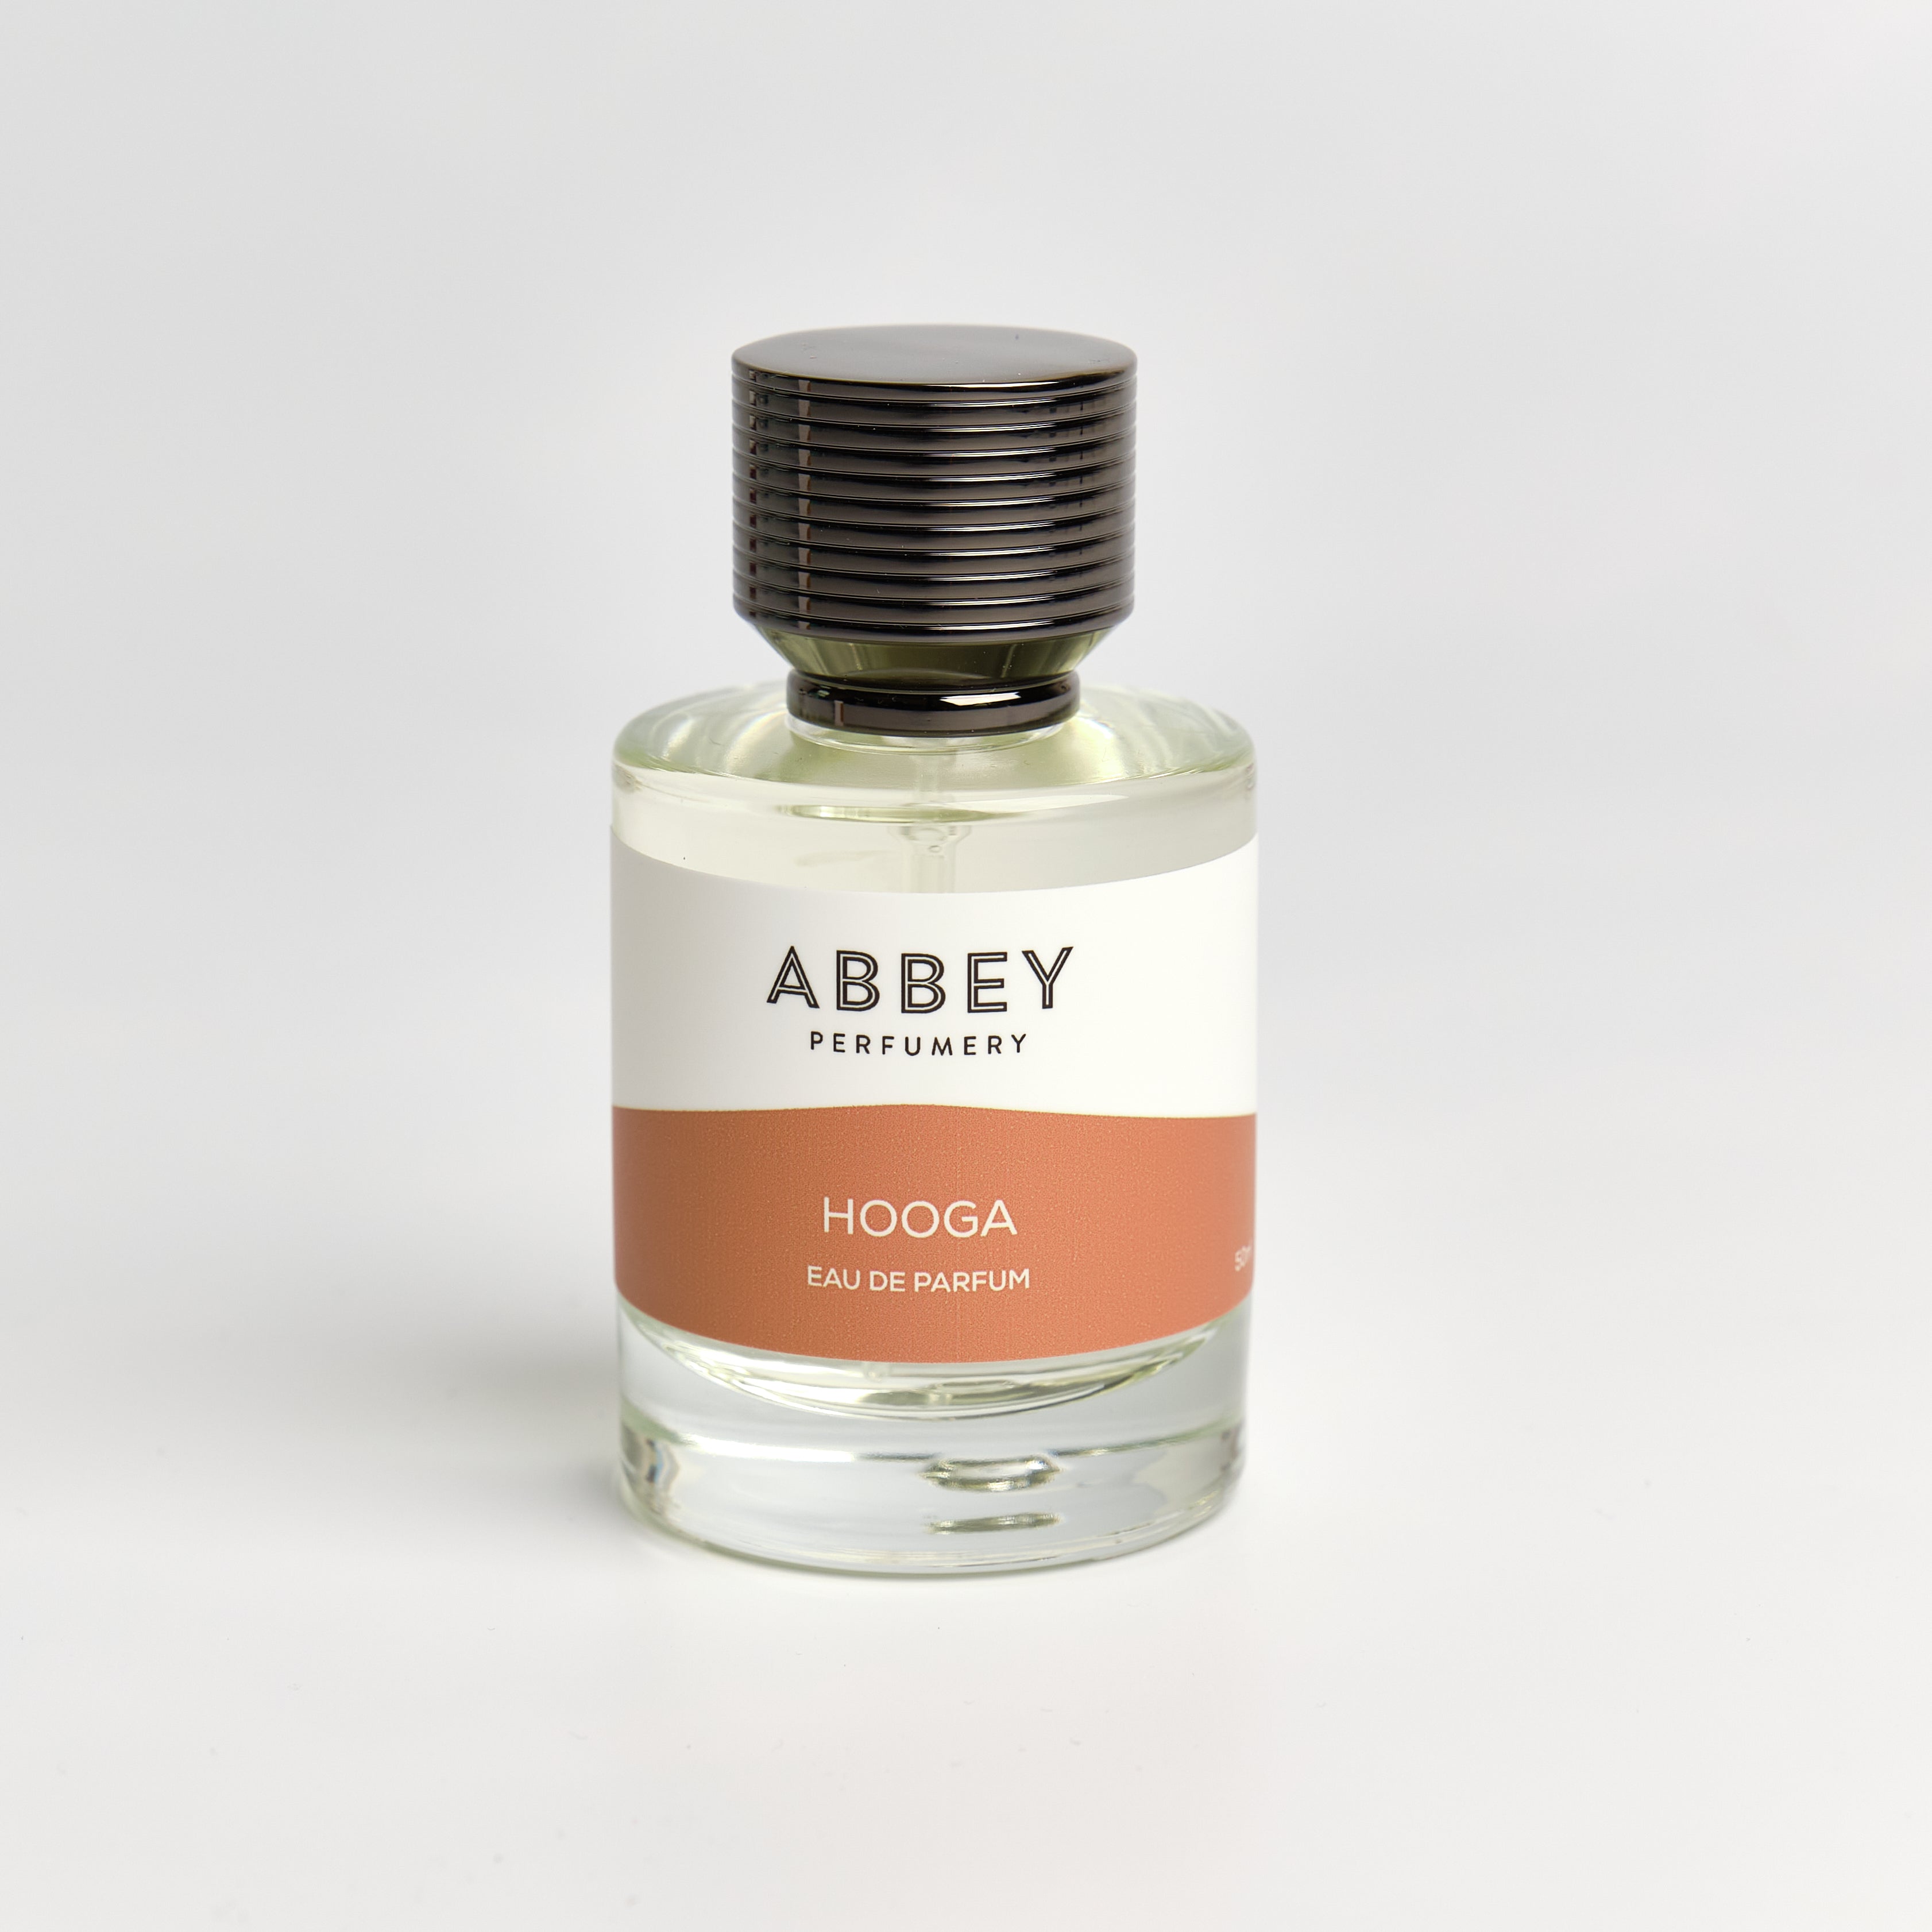 Hooga perfume bottle 50ml on white background